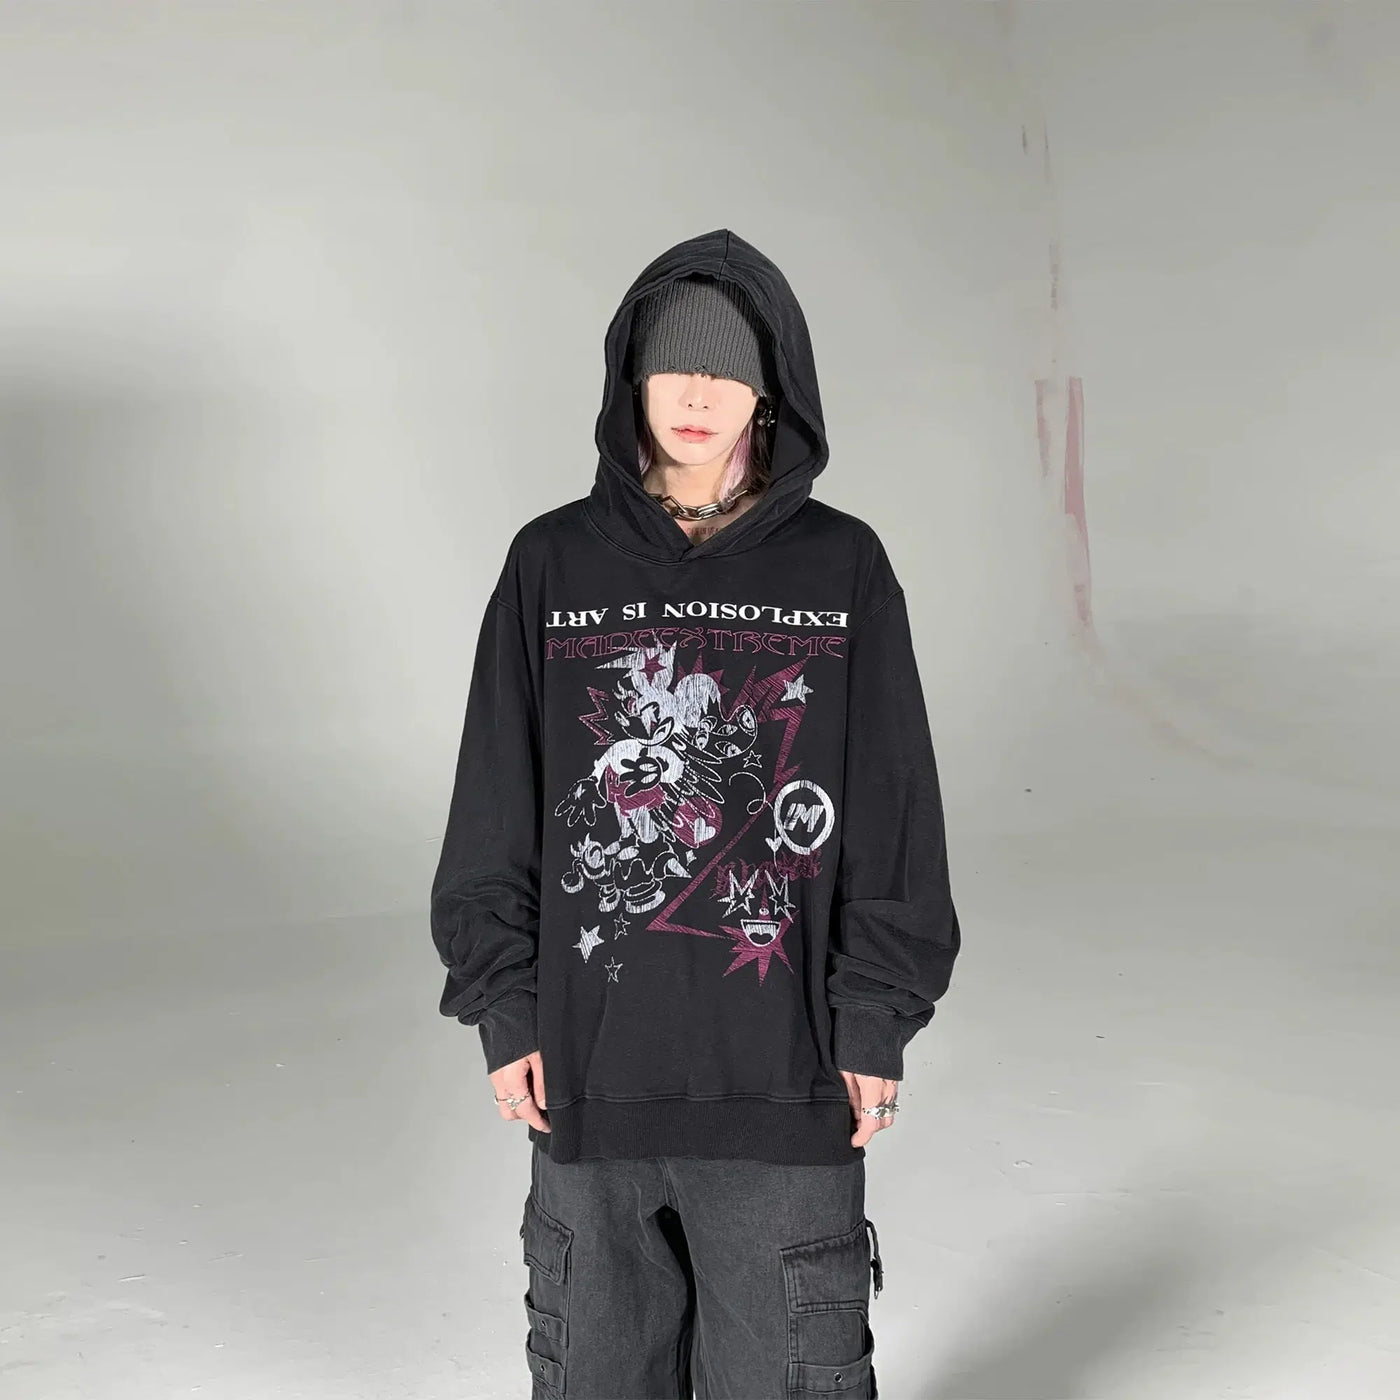 Art Explosion Graphic Hoodie Korean Street Fashion Hoodie By Ash Dark Shop Online at OH Vault